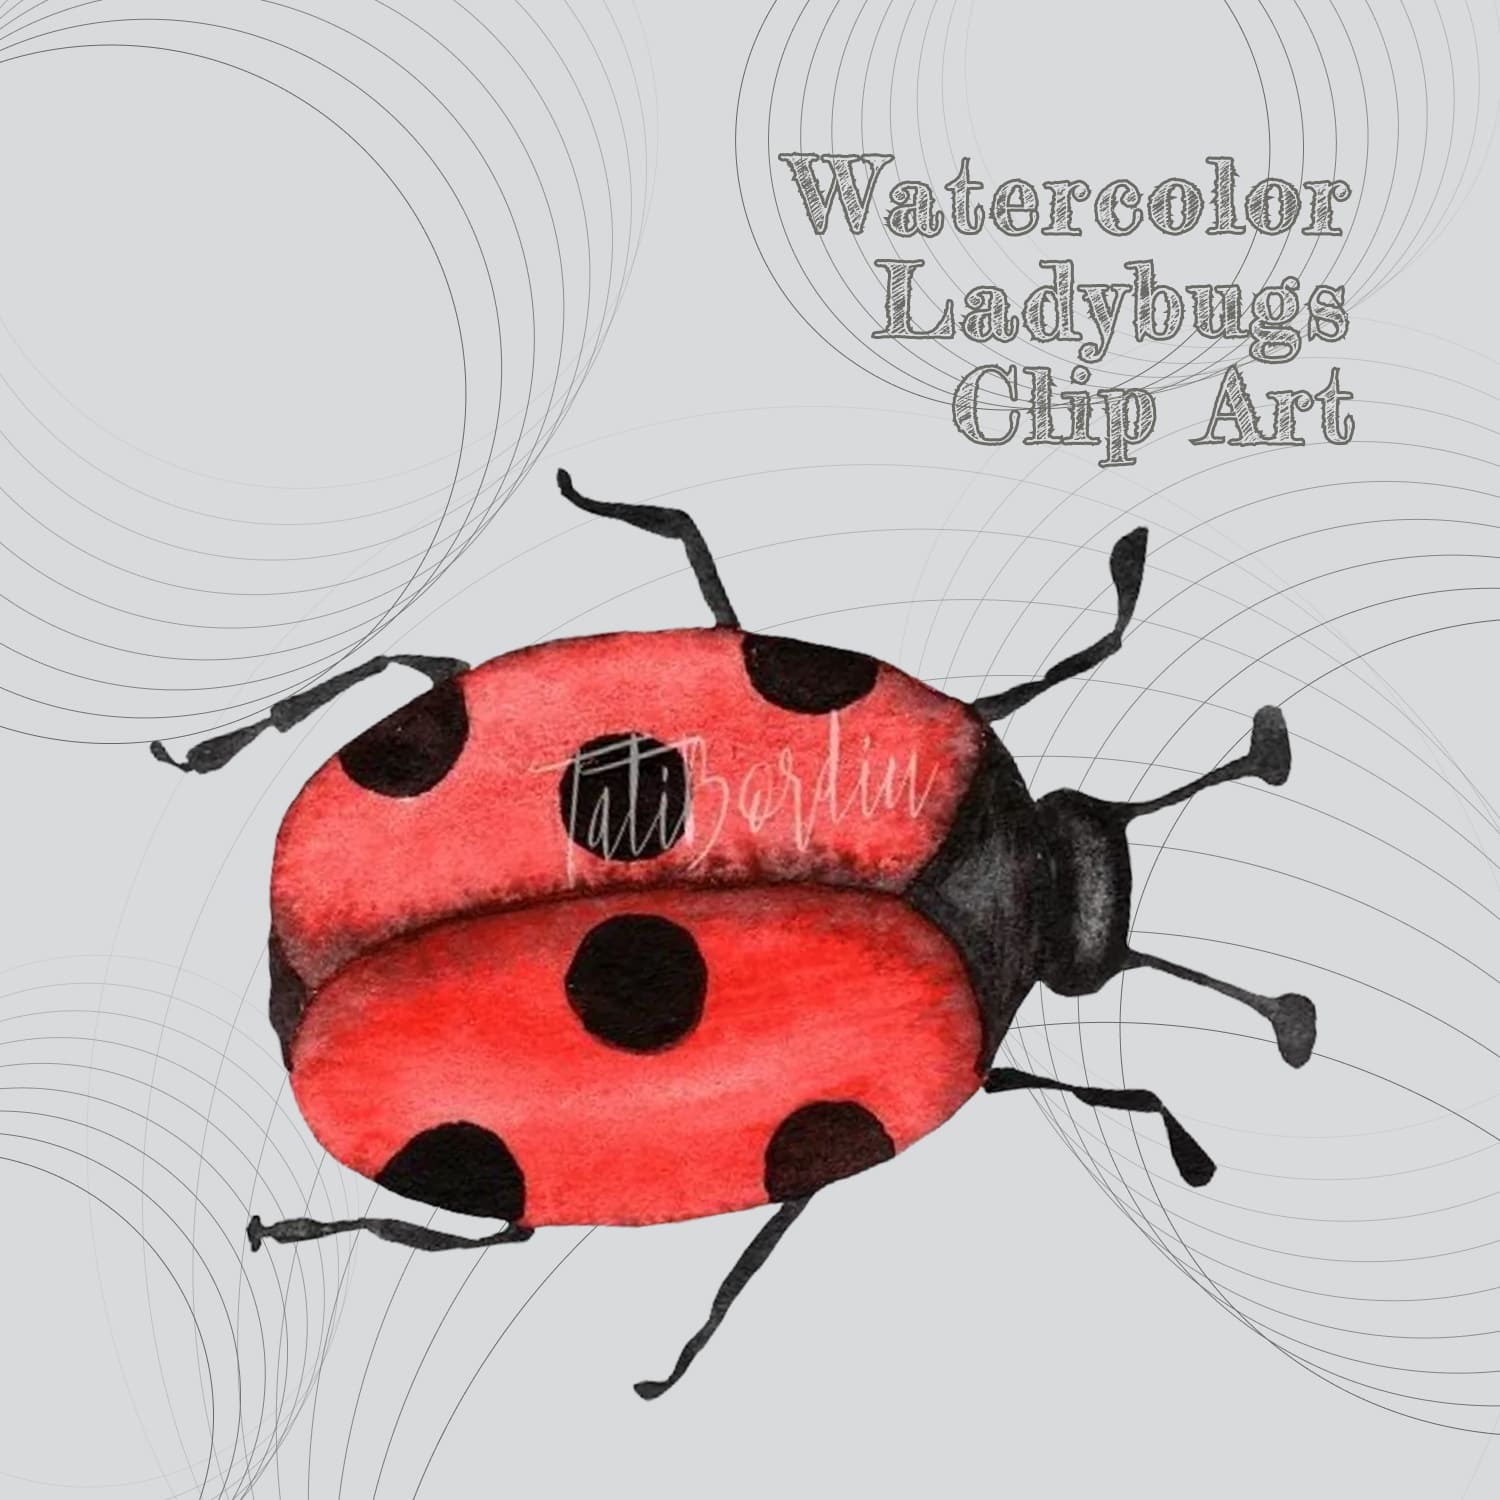 Watercolor ladybugs clip art - main image preview.